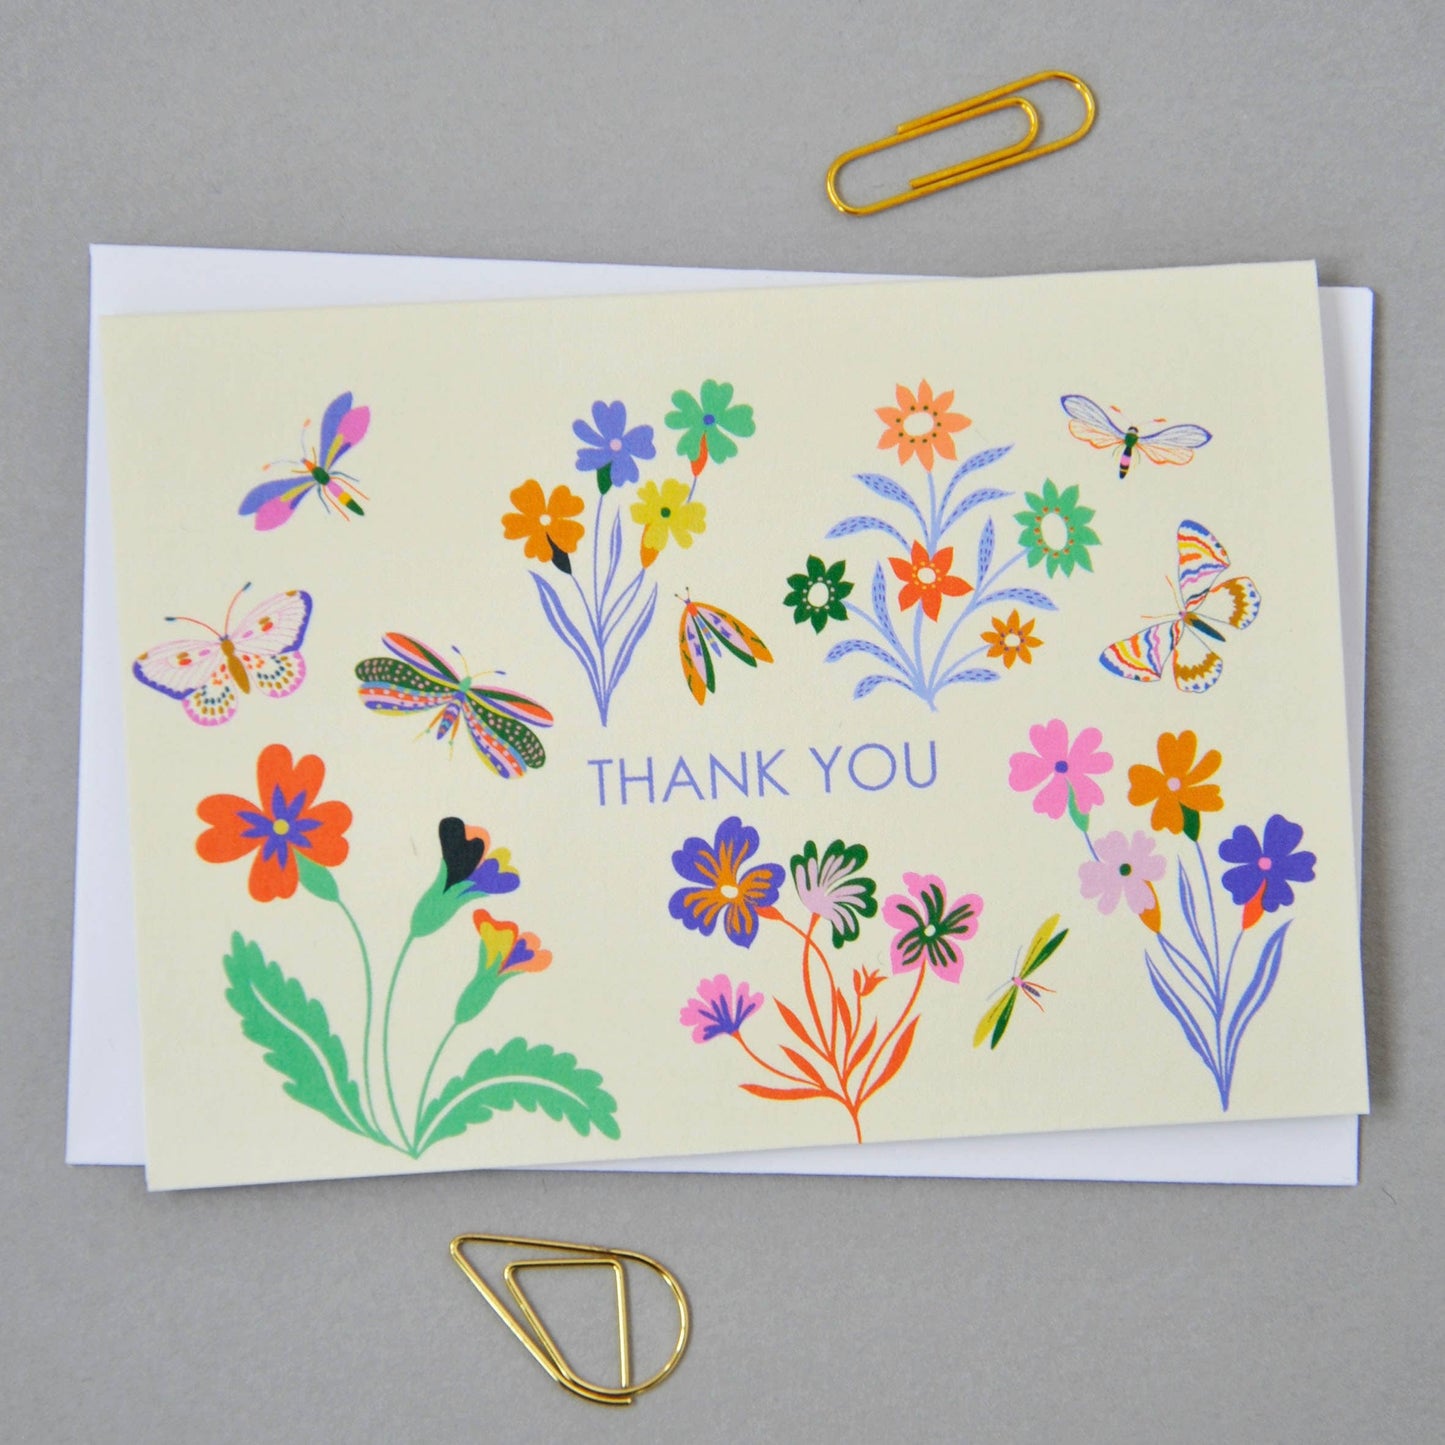 Elvira Van Vredenburgh Designs - Thank You Notecard Gift Set